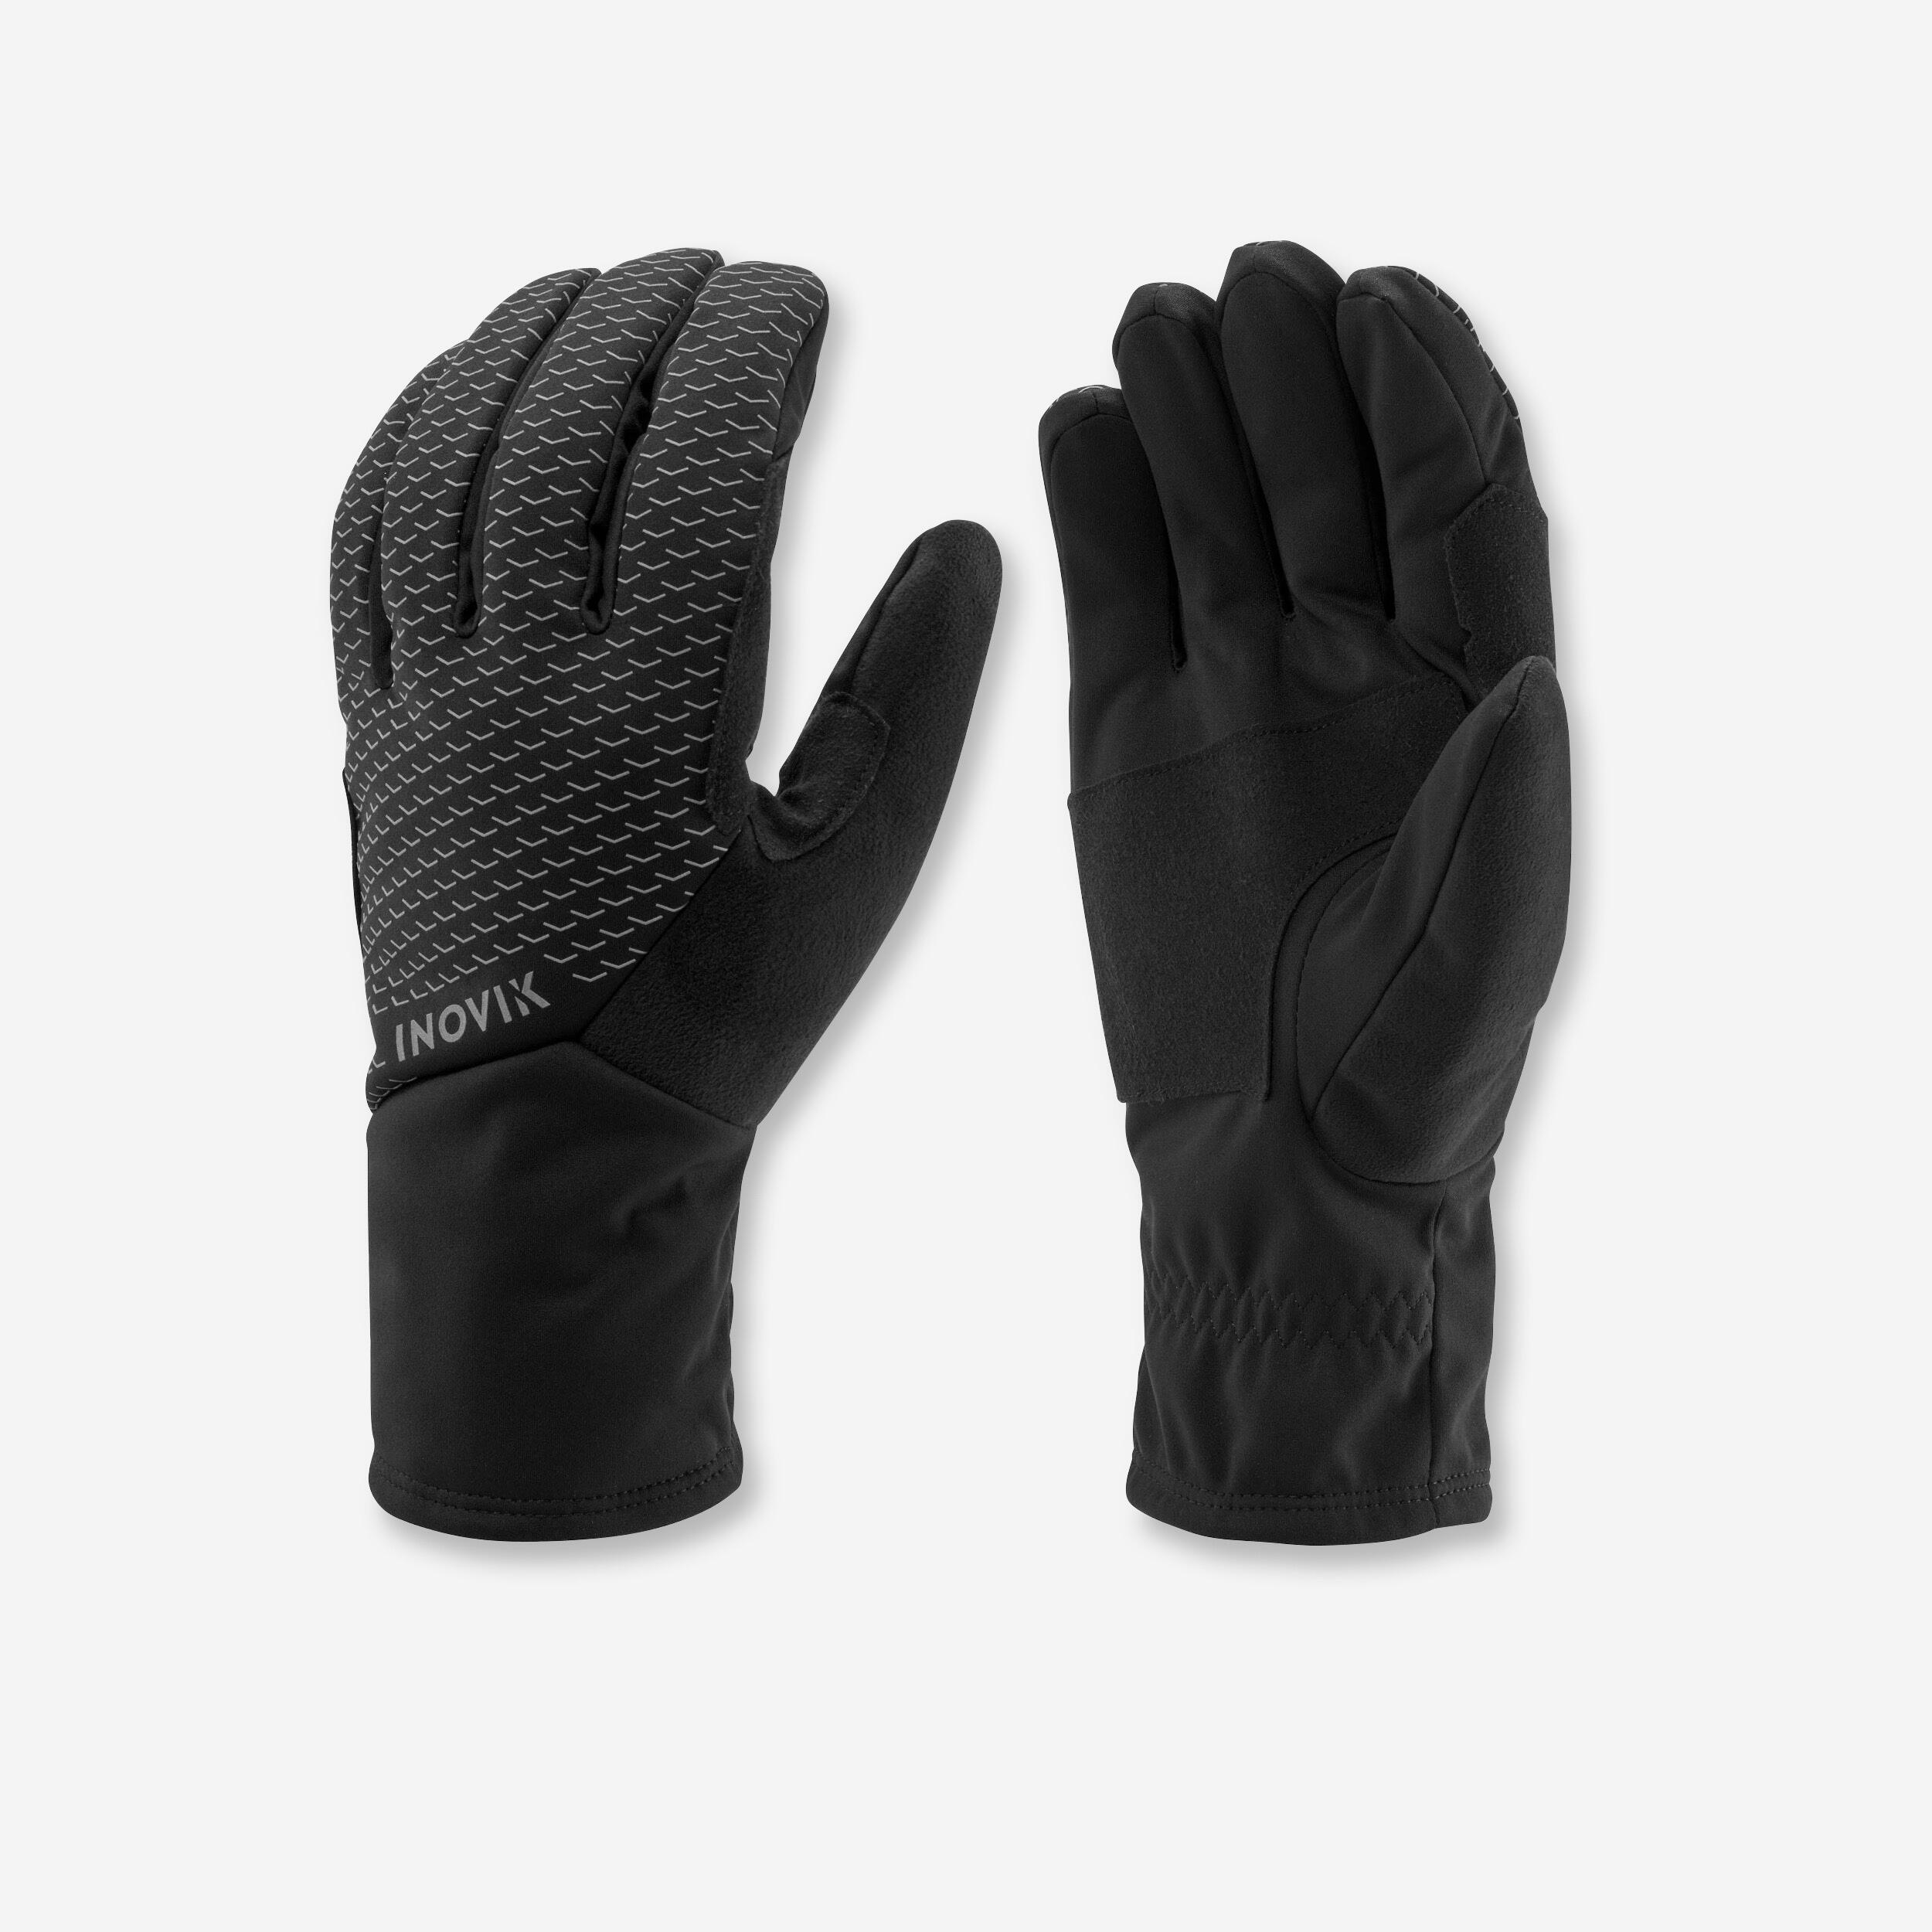 INOVIK Gants De Ski Fond Chaud Noir - Xc Gloves 100 Adulte